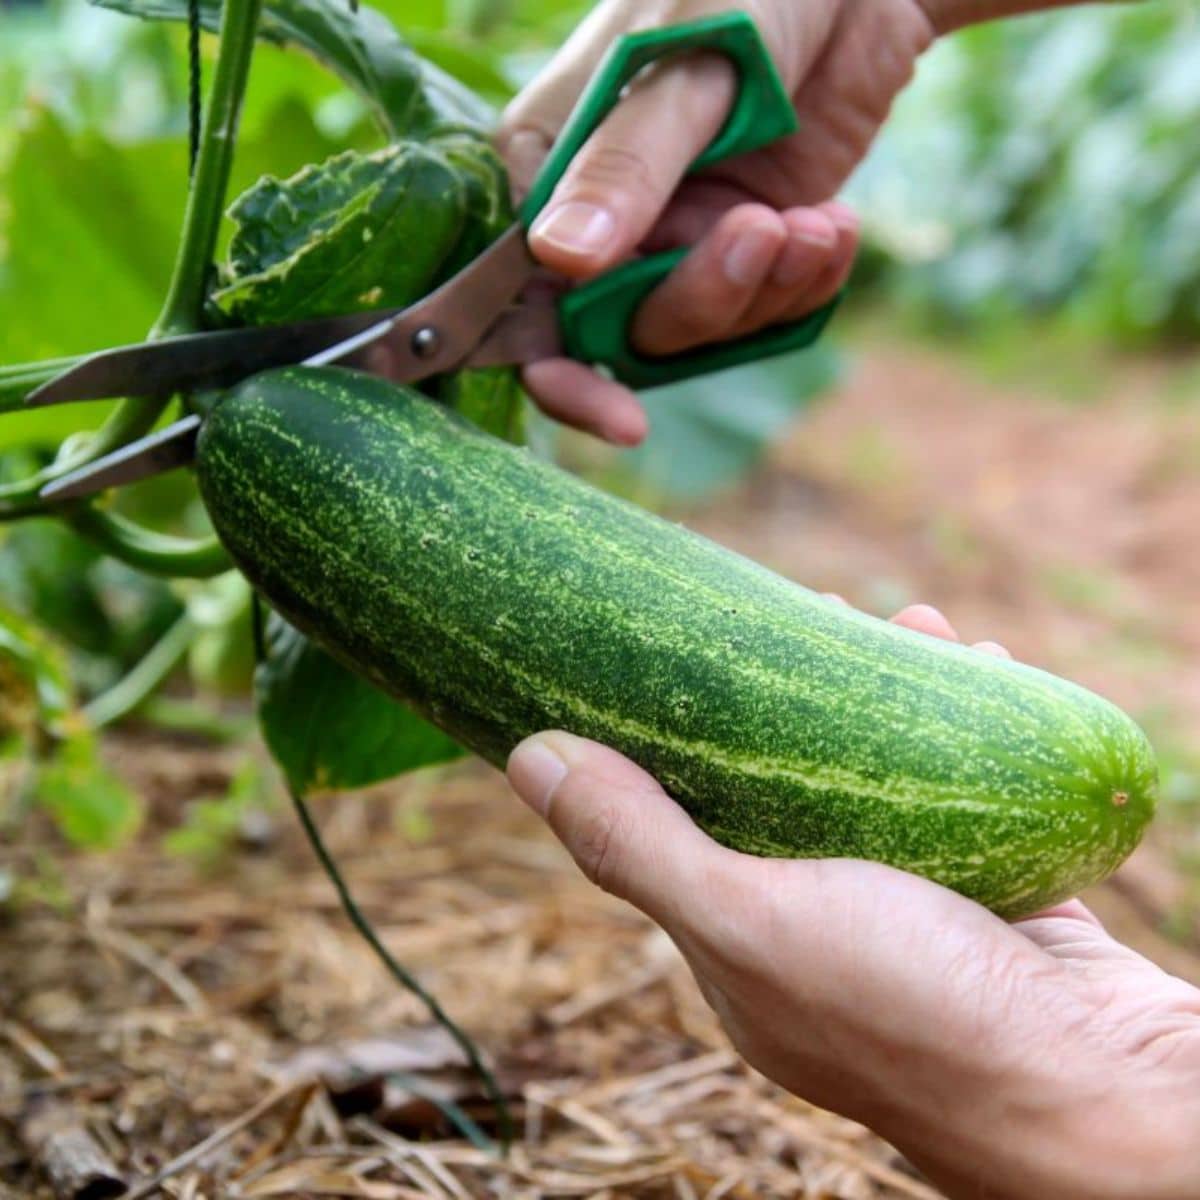 A farmer with scissors harvesting an organic cucumber.